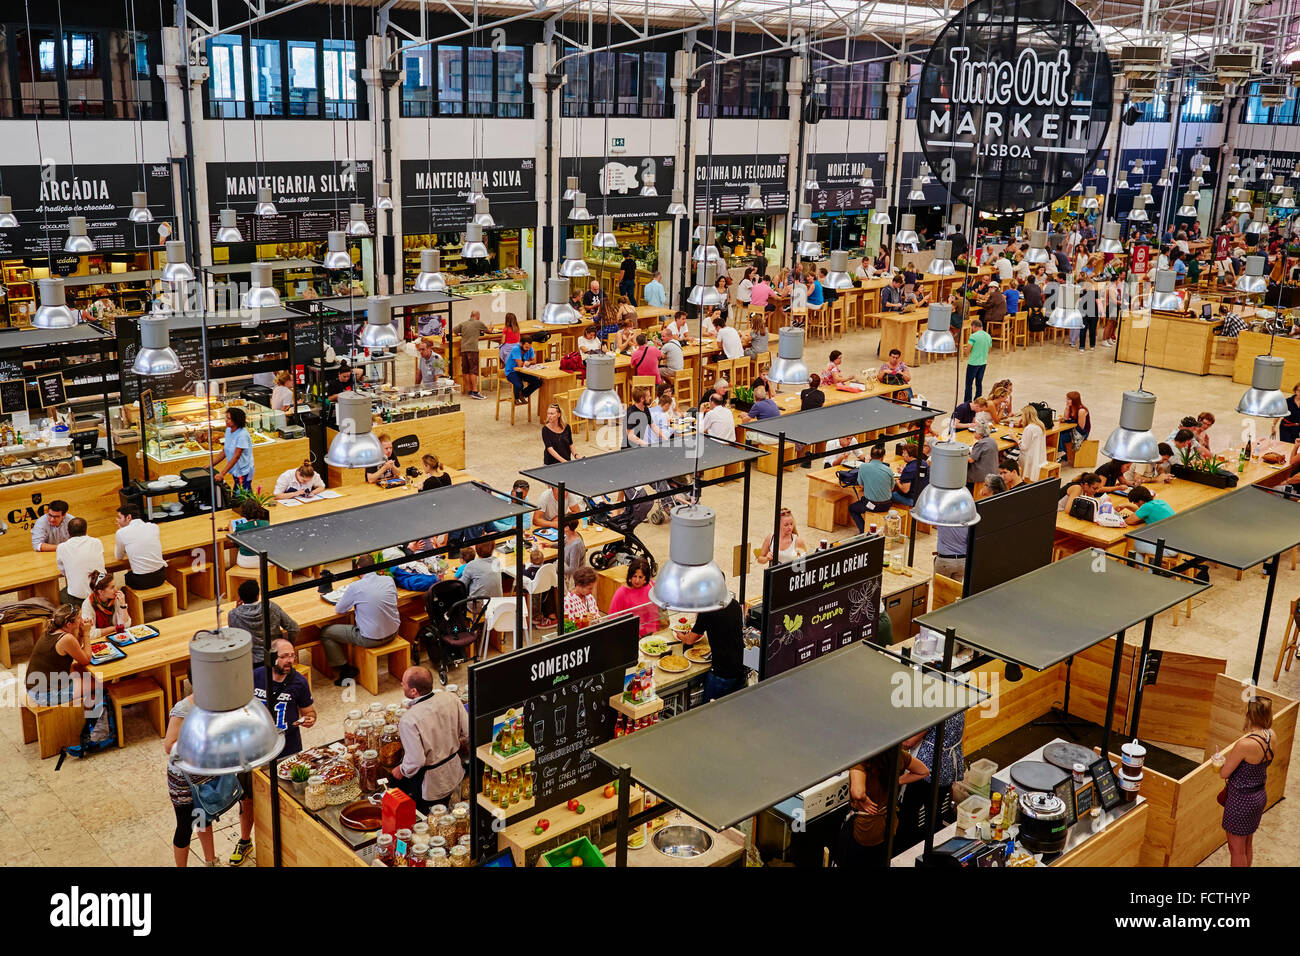 Il Portogallo, Lisbona, food court Time Out Mercado da Ribeira Foto Stock